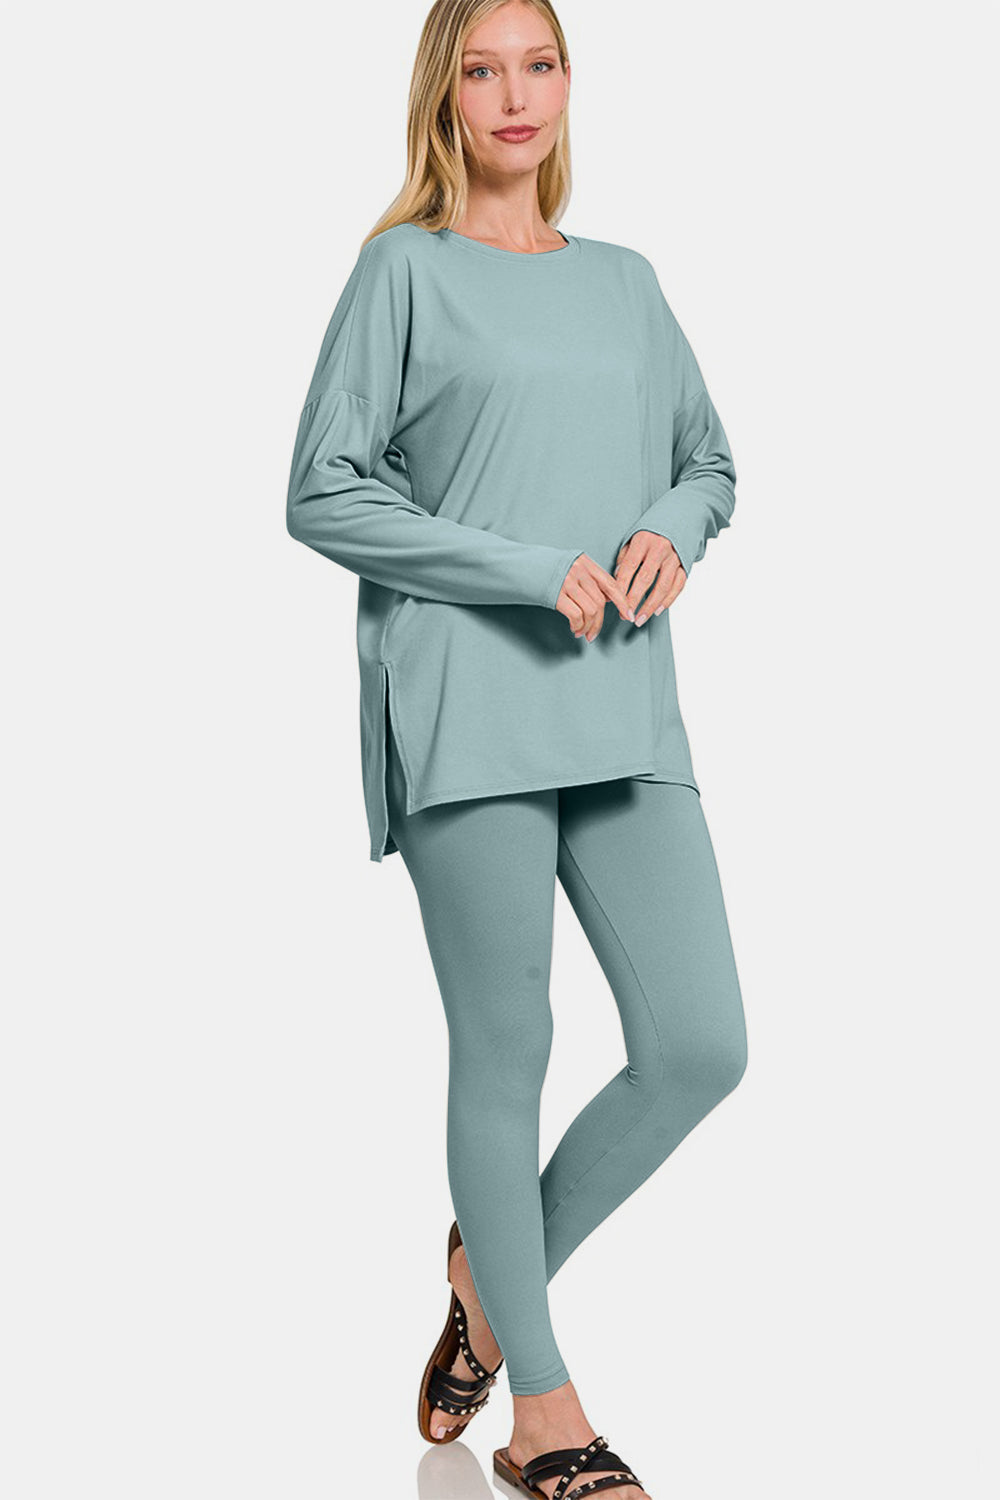 Zenana Blue Grey Brushed Microfiber Long Sleeve Top and Leggings Lounge Set Trendsi